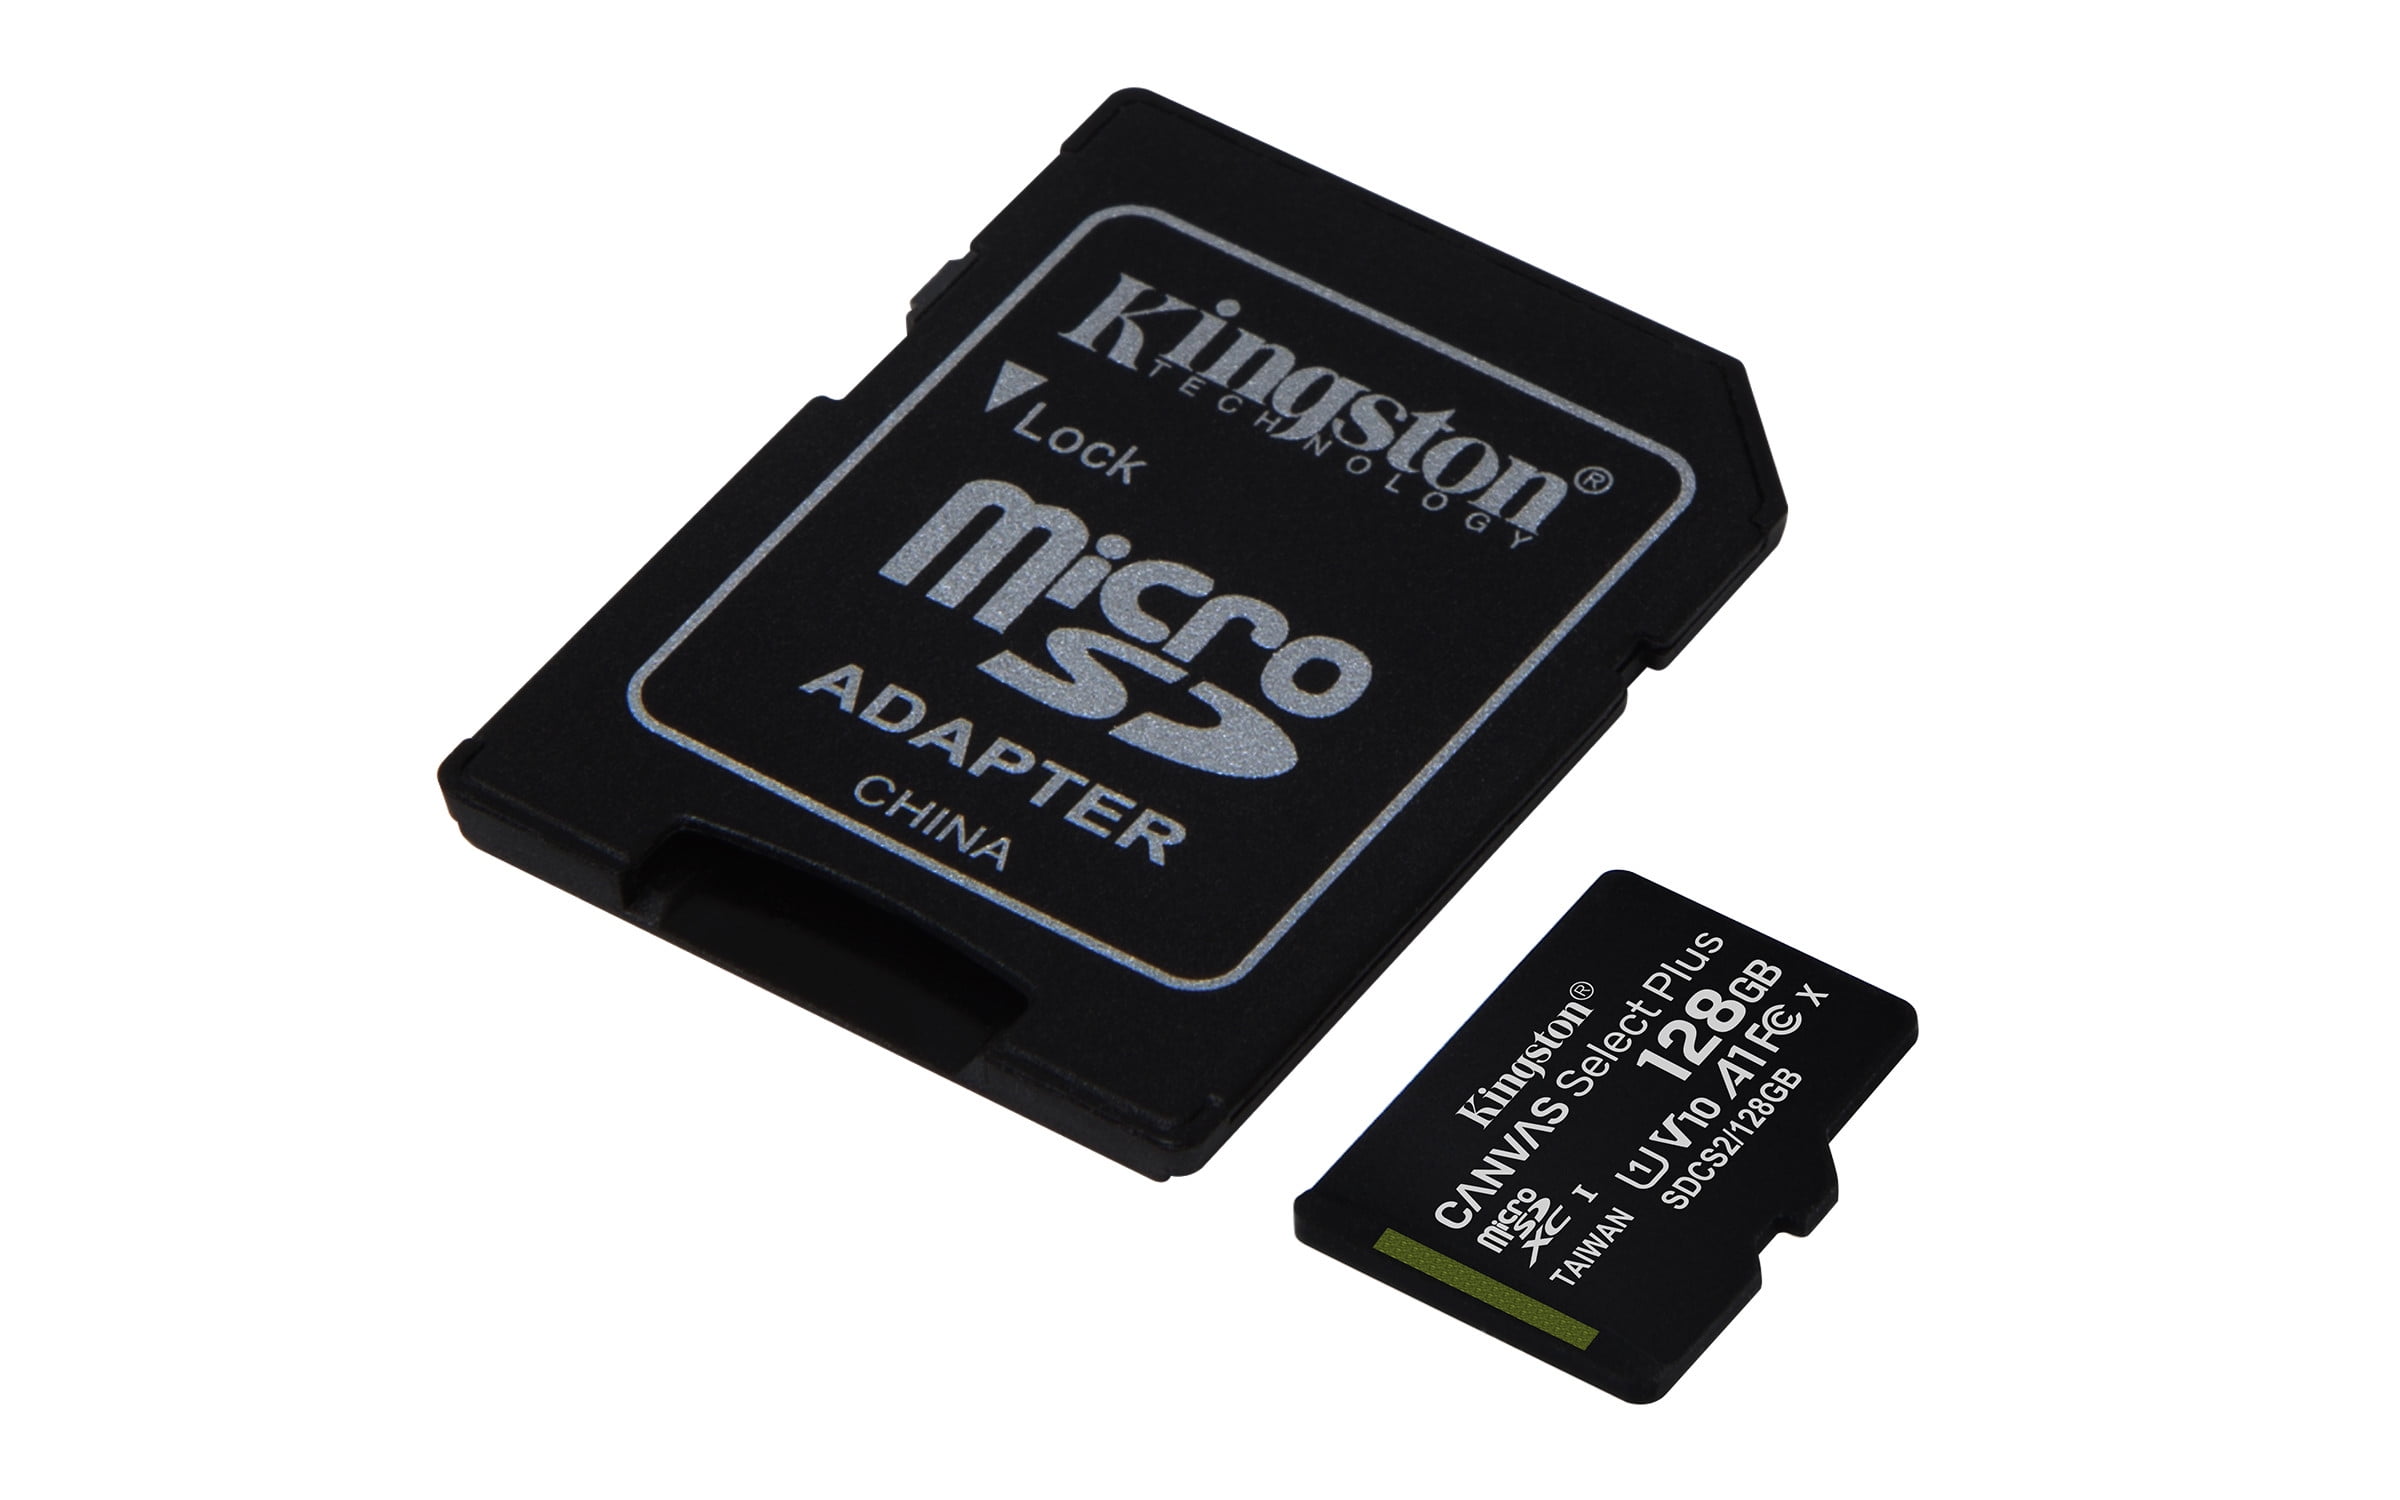 KINGSTON MICRO SD 128GB CLASS 10 FLASH CARD ALCATEL LG HTC CANVAS SELECT